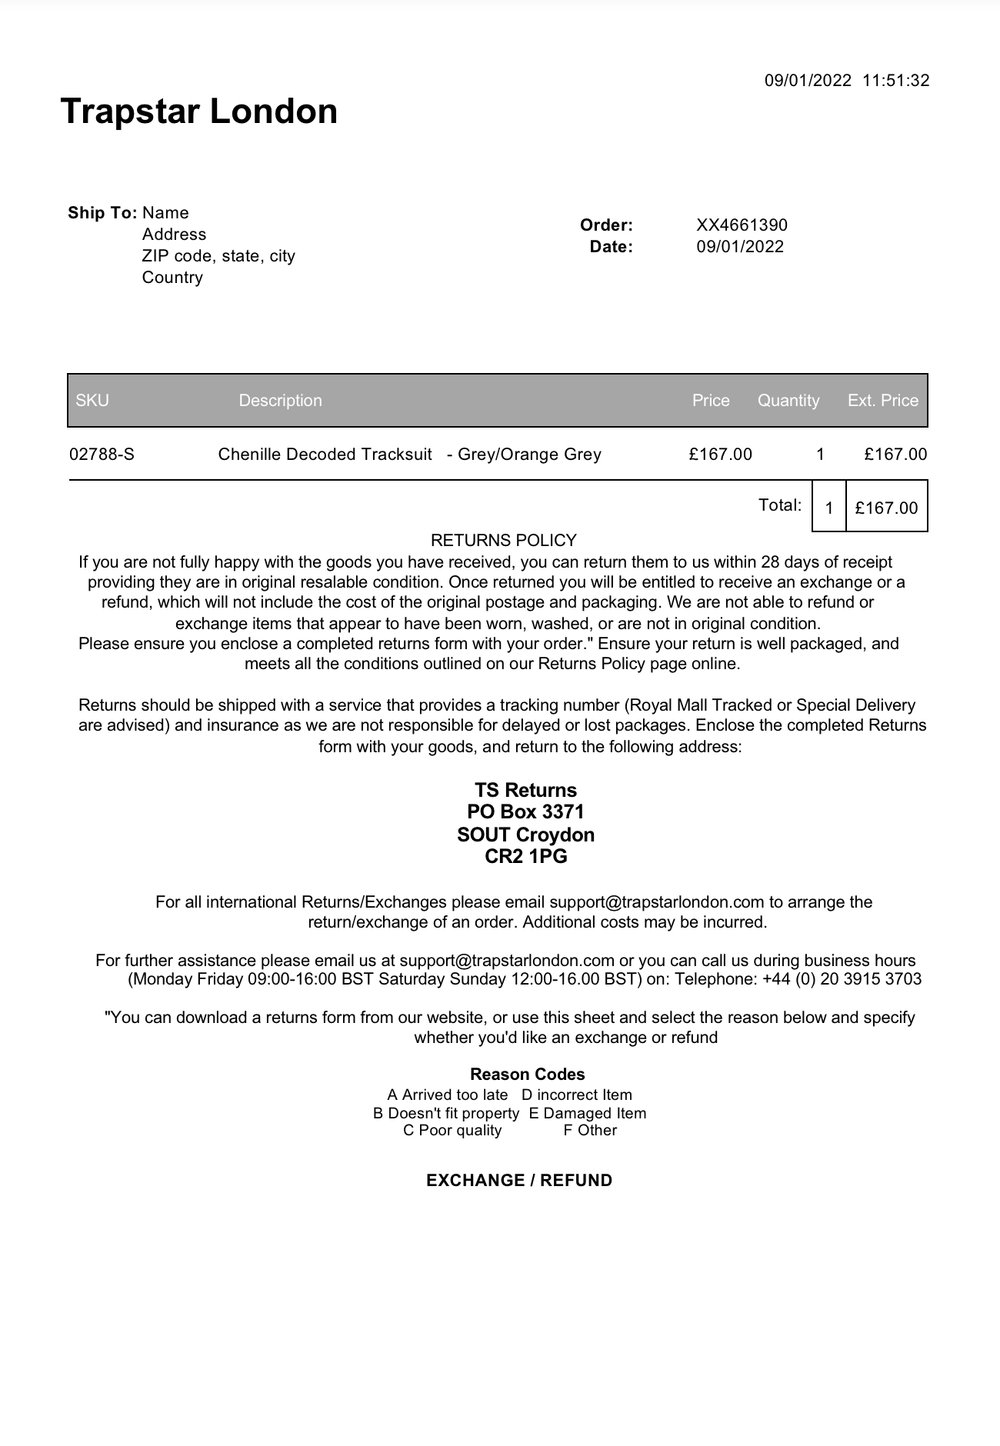 Louis Vuitton email receipt — RepReceipt